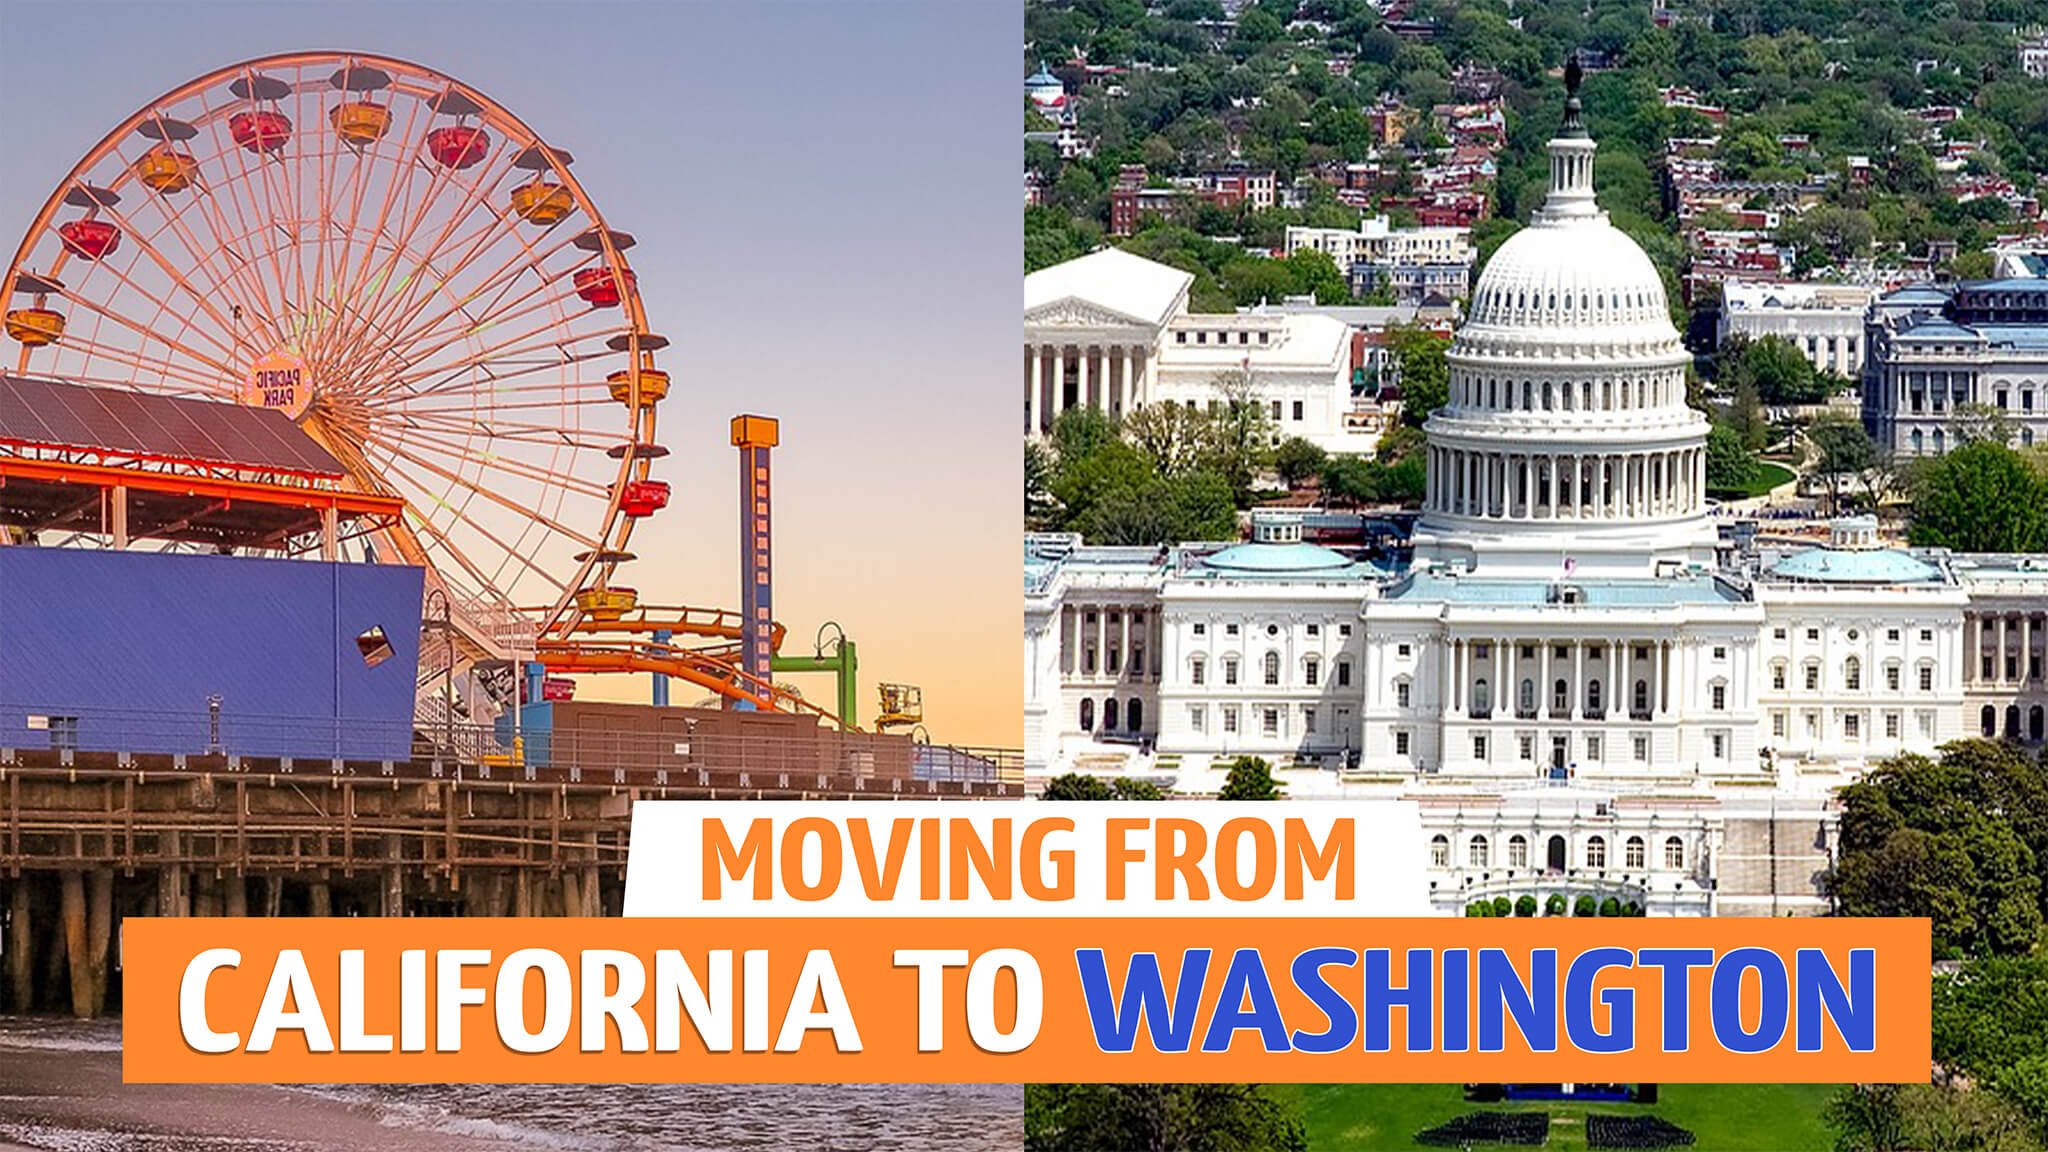 Moving from California to Washington.